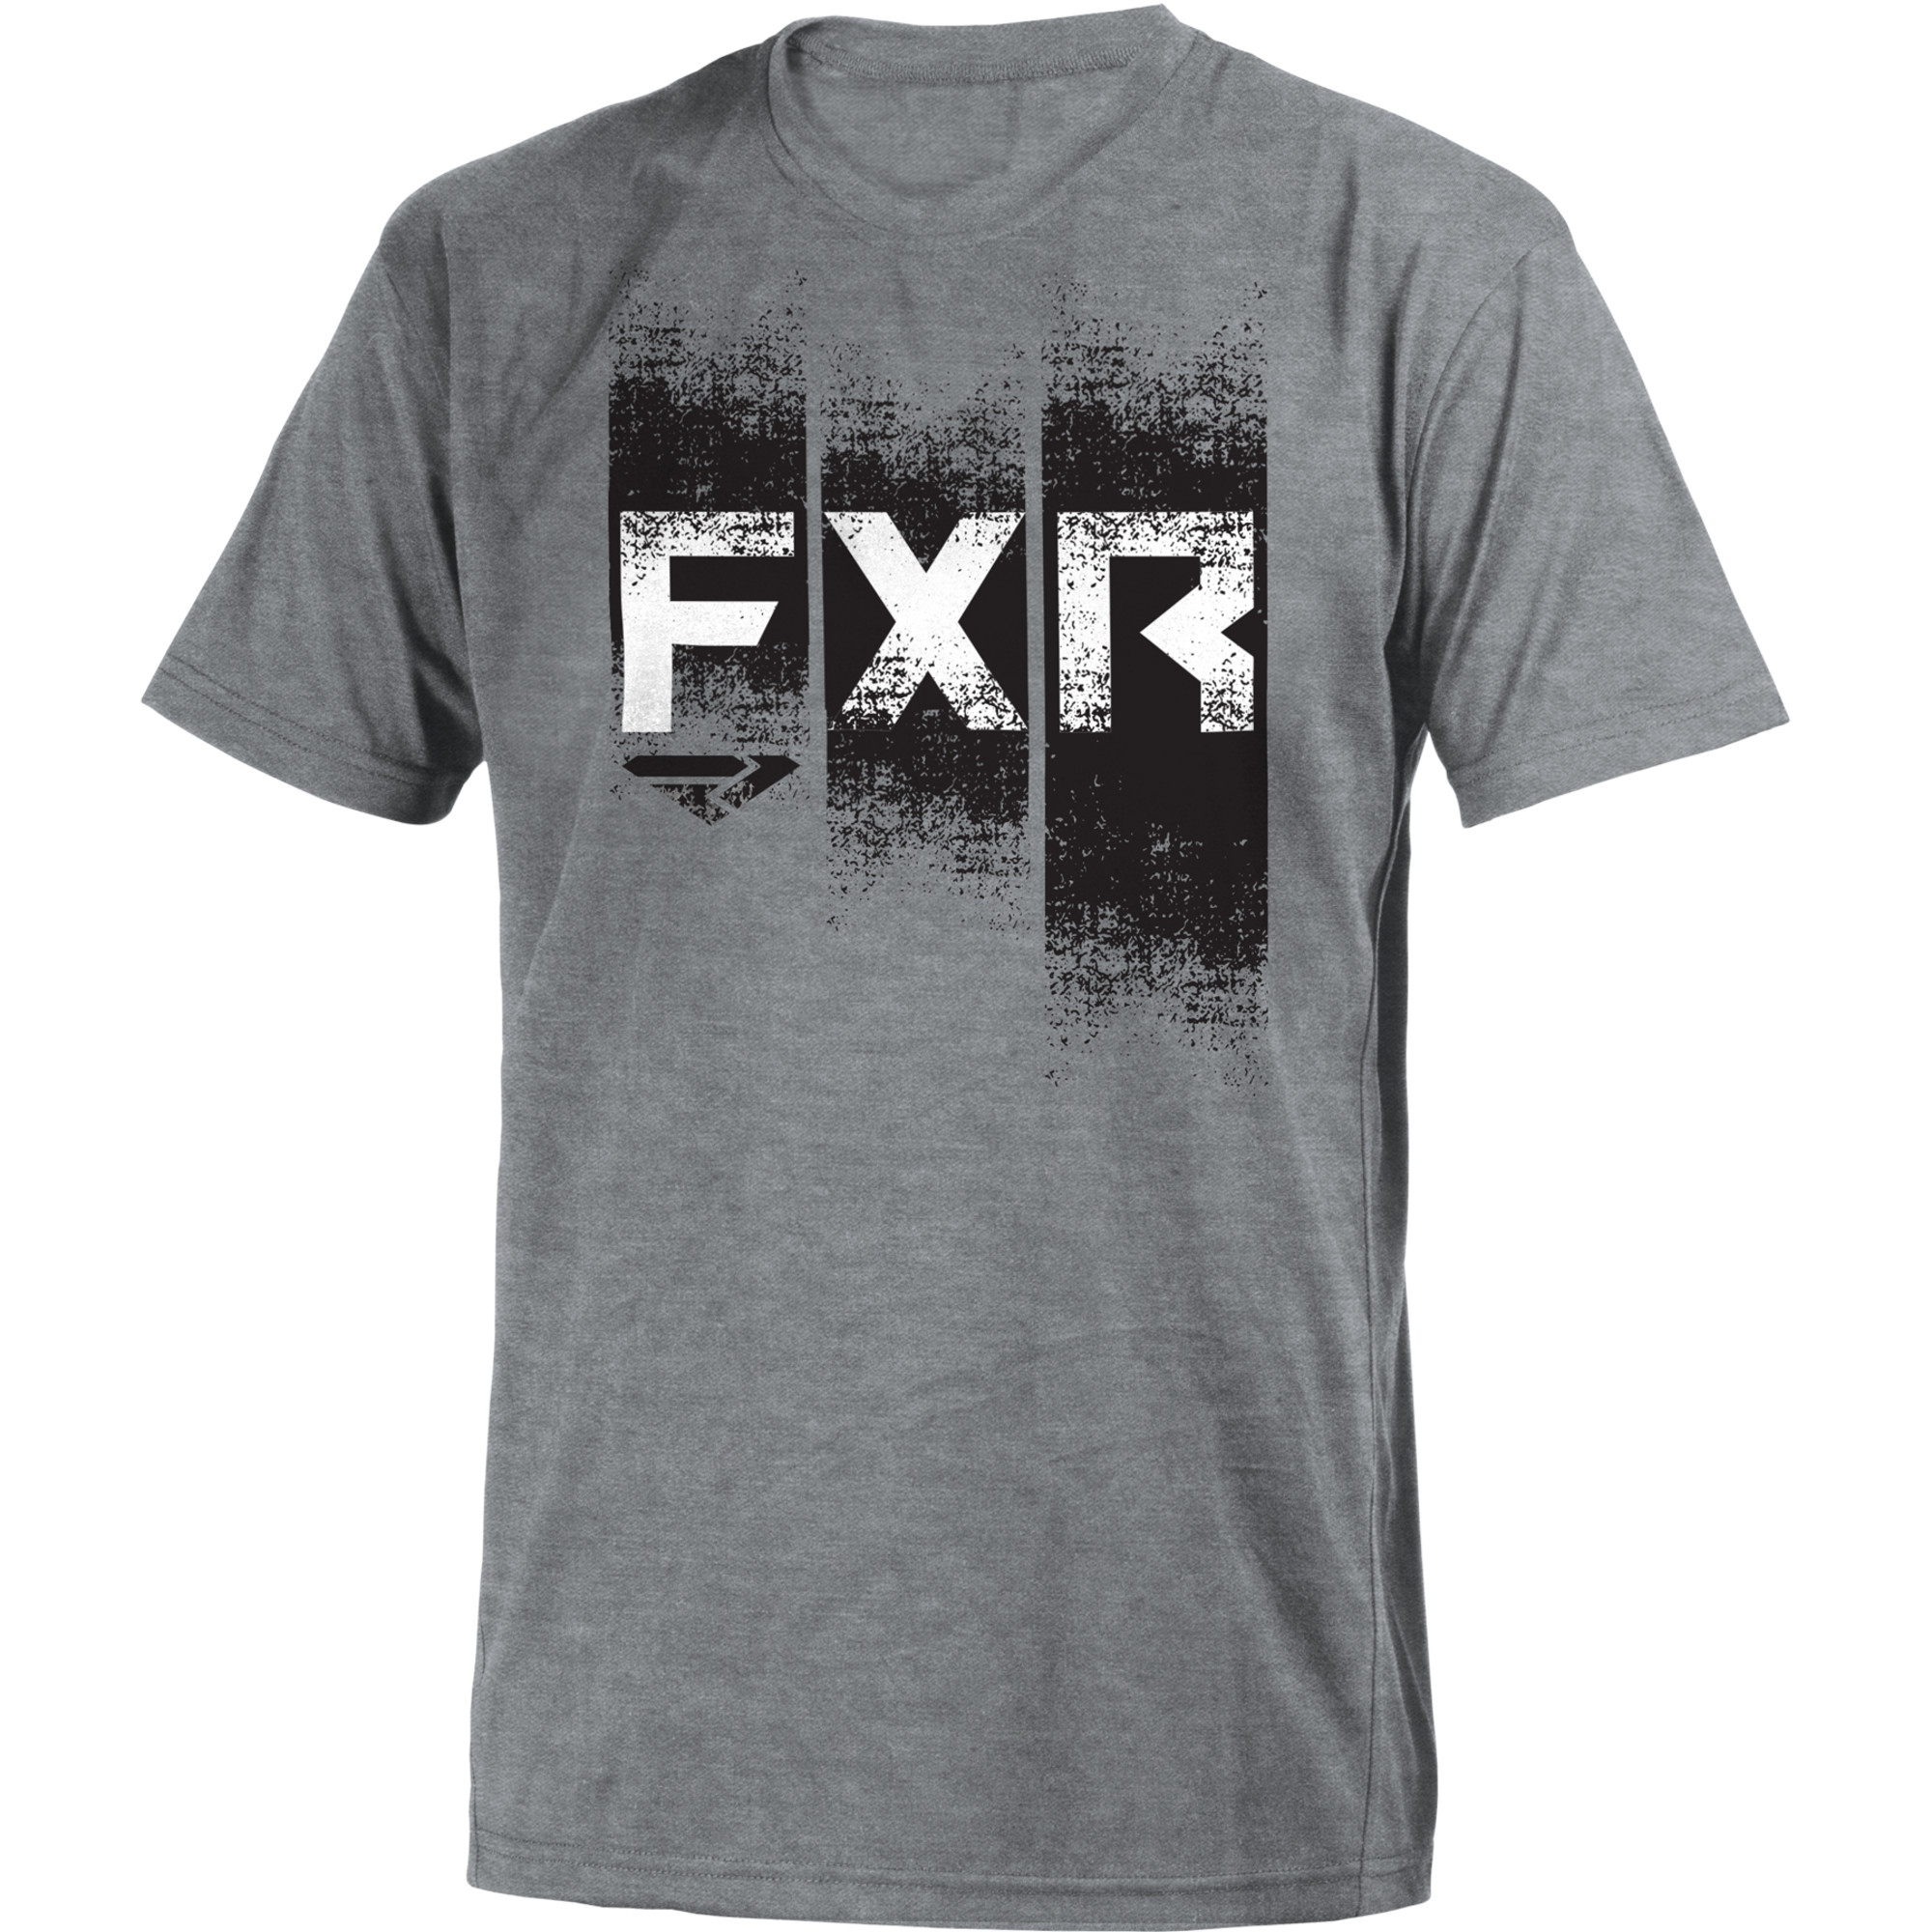 fxr racing t-shirt shirts for kids broadcast